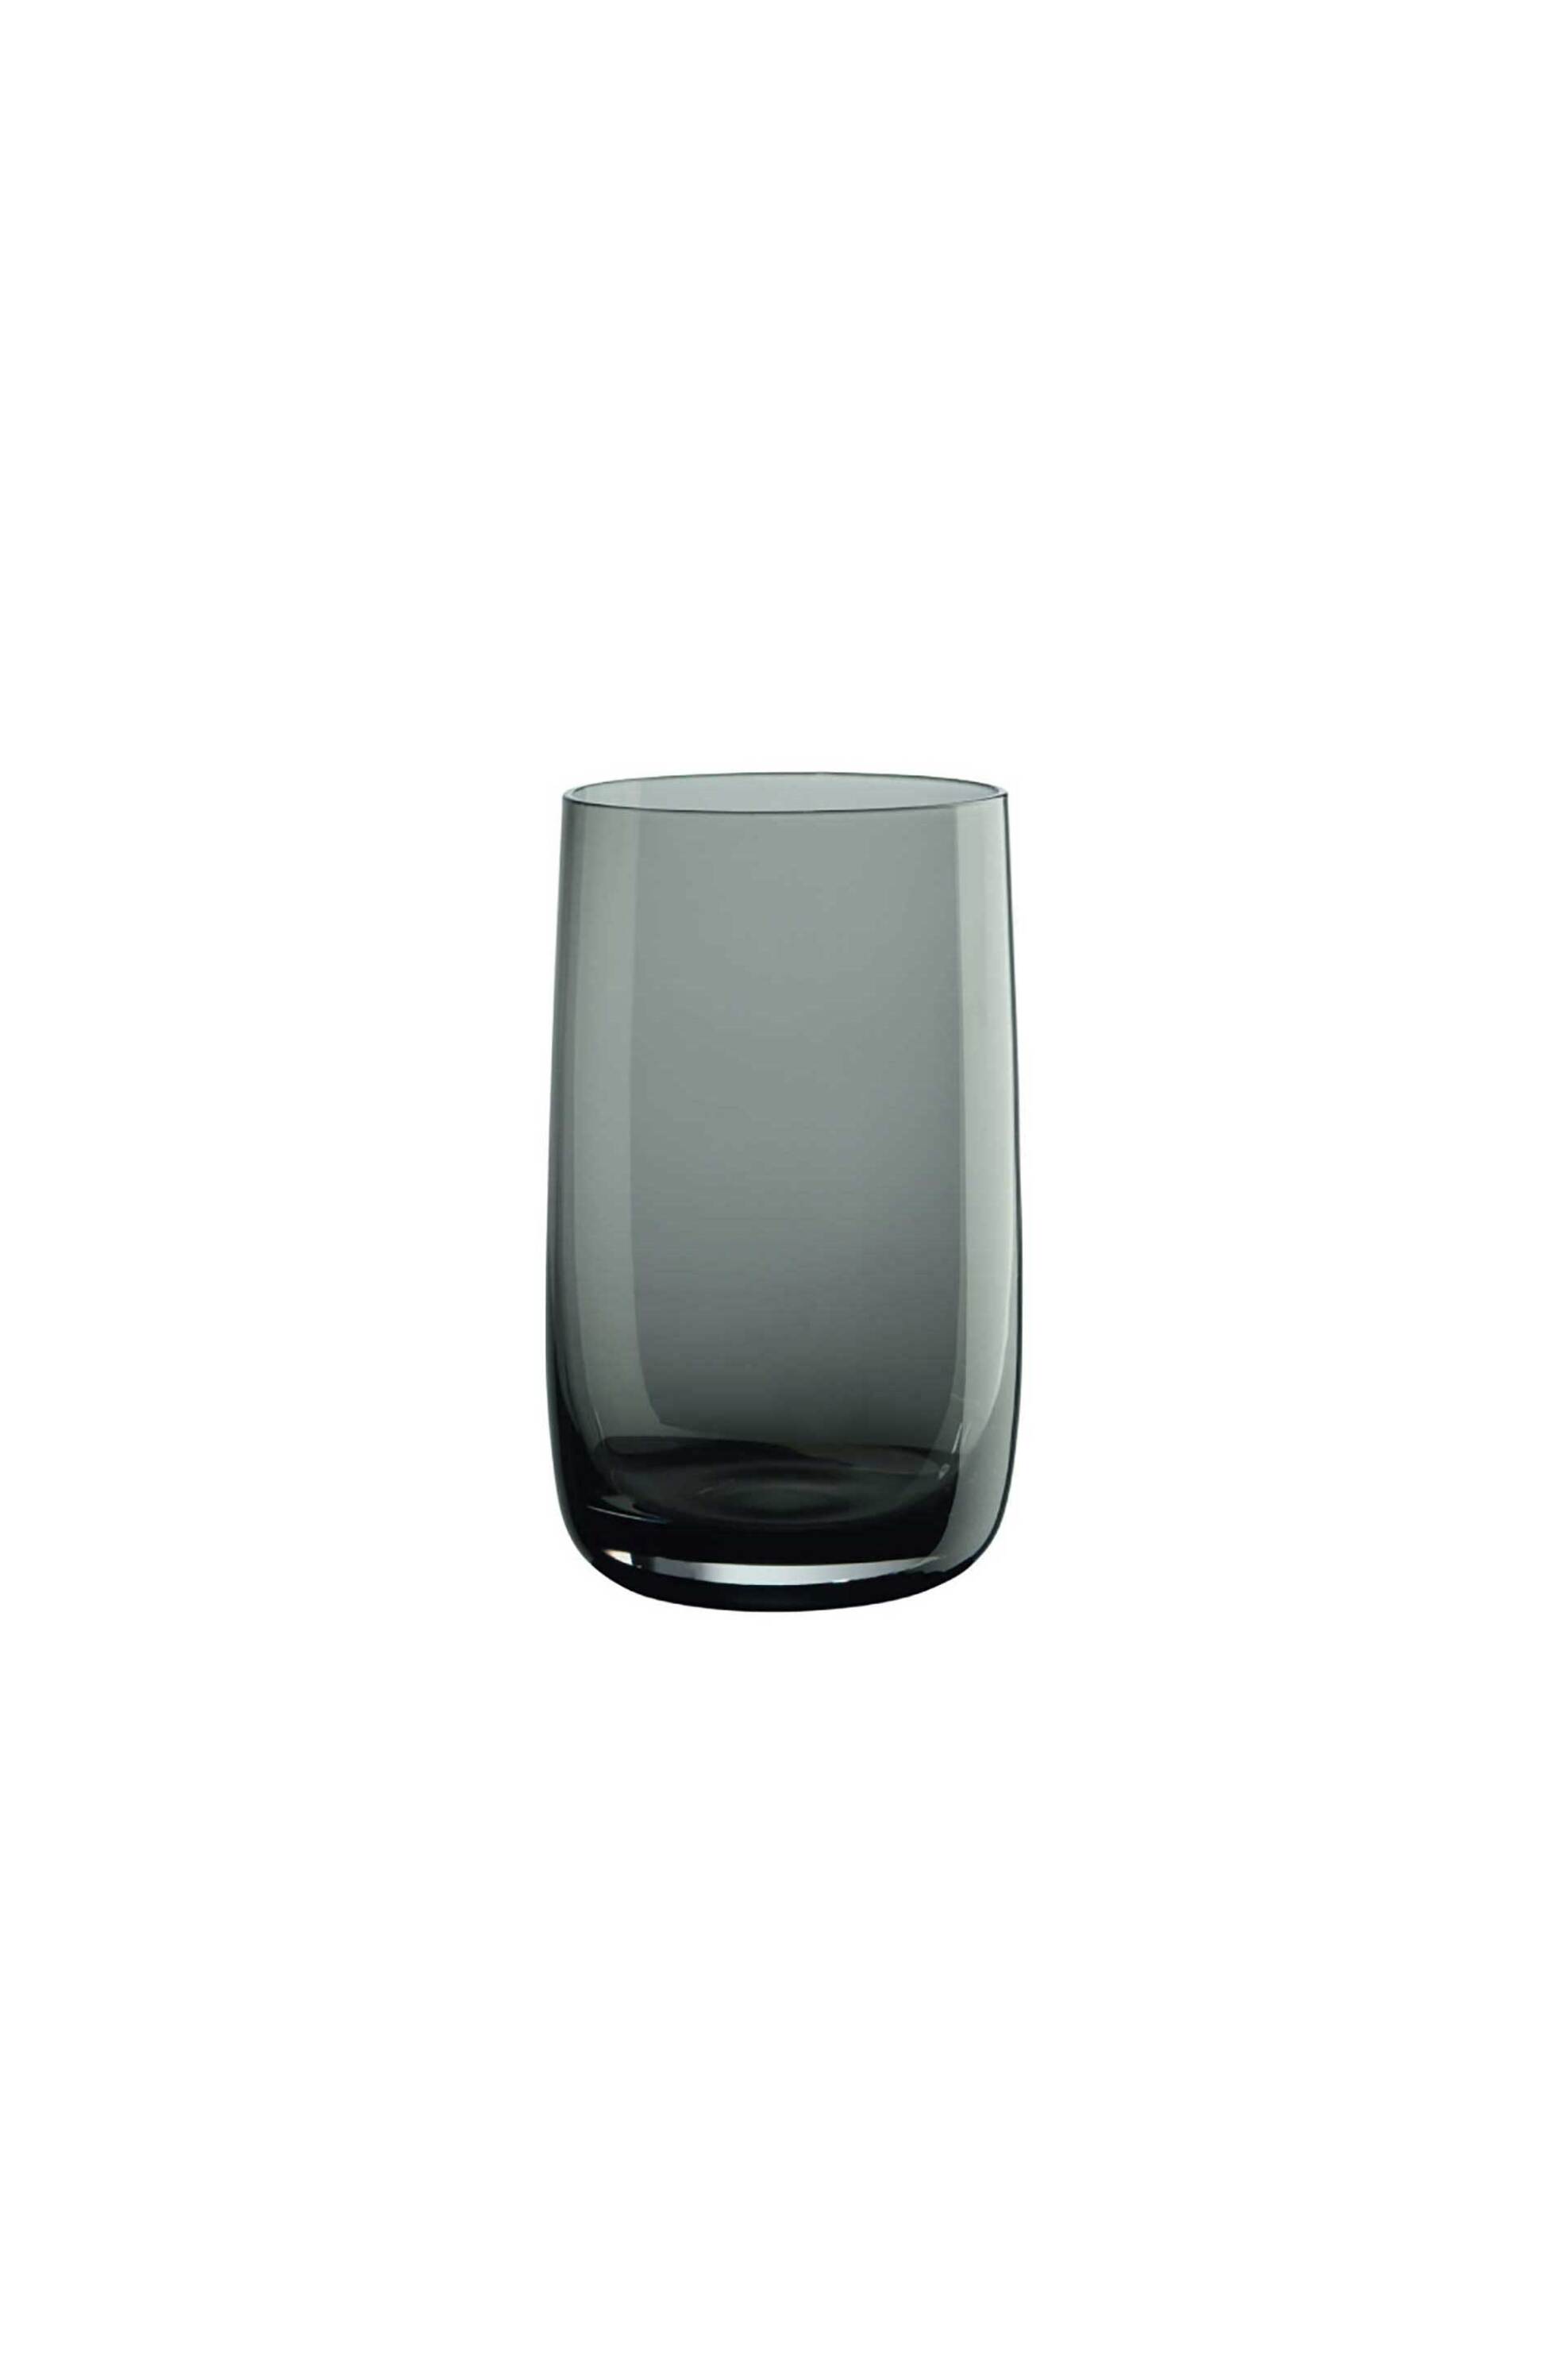 Home > ΚΟΥΖΙΝΑ > Υαλικά > Ποτήρια ASA Selection γυάλινο ποτήρι νερού " Sarabi" 400 ml - 53503009